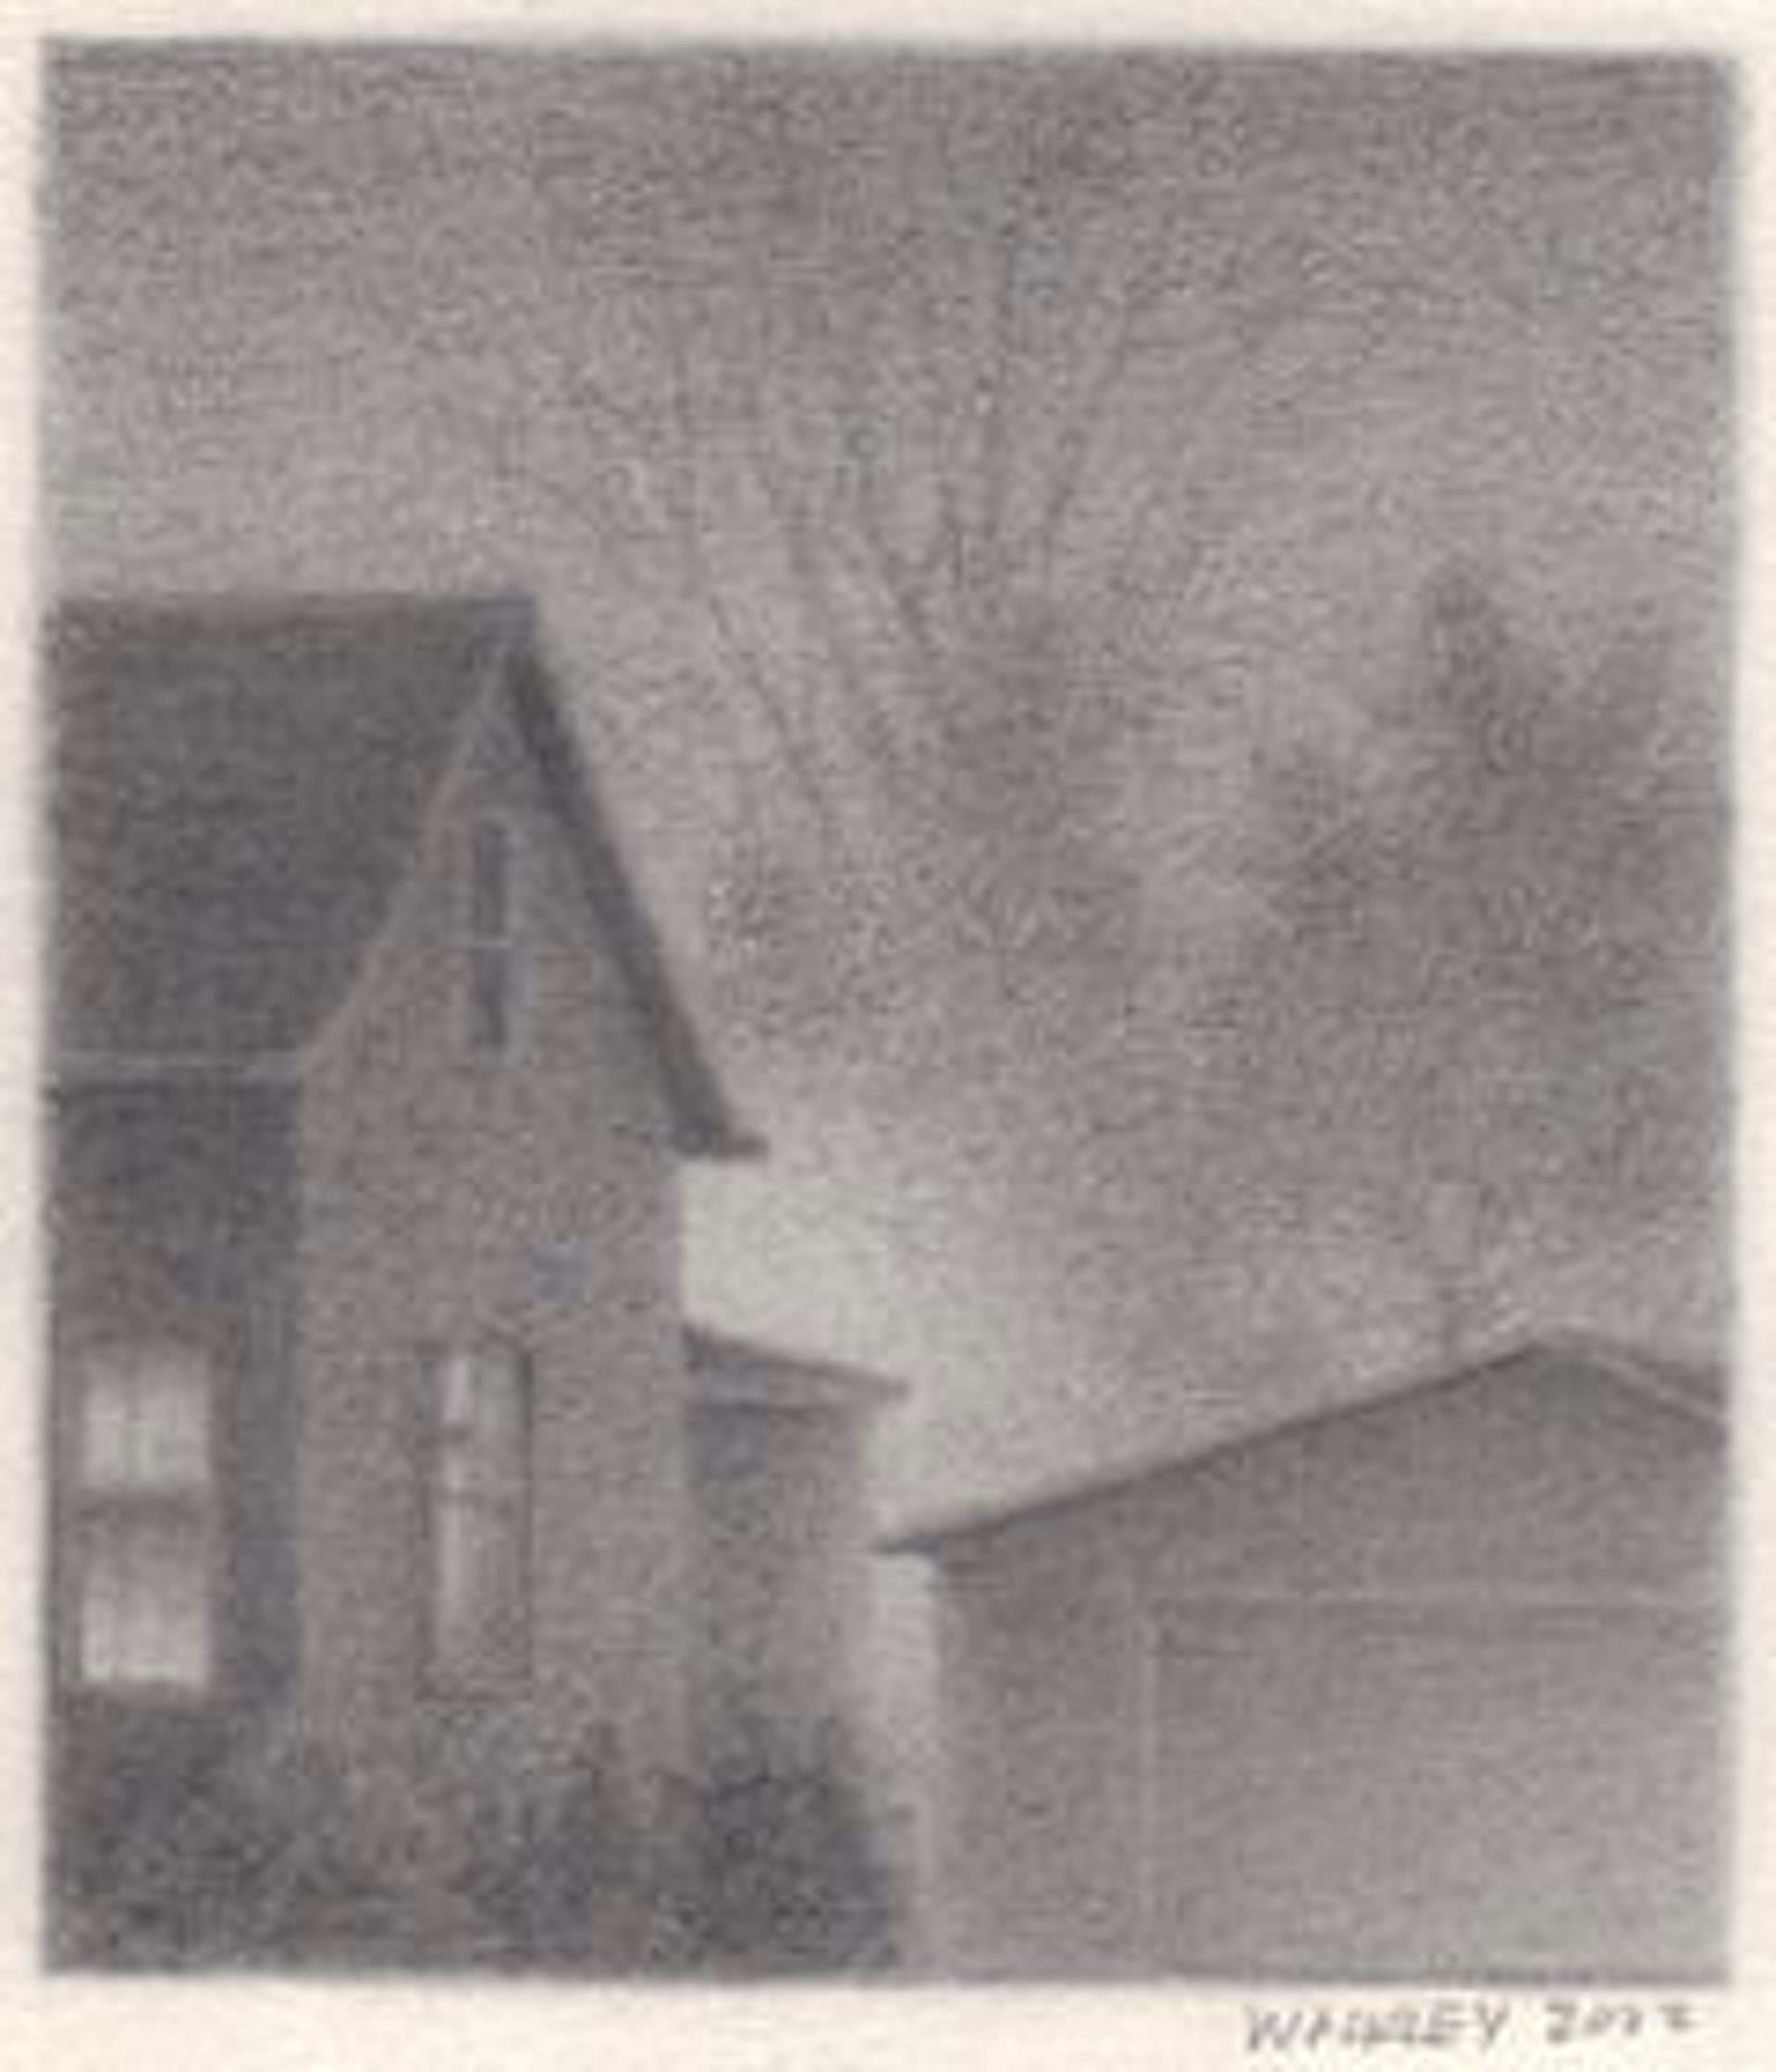 A Foggy Night by Peter Walkley